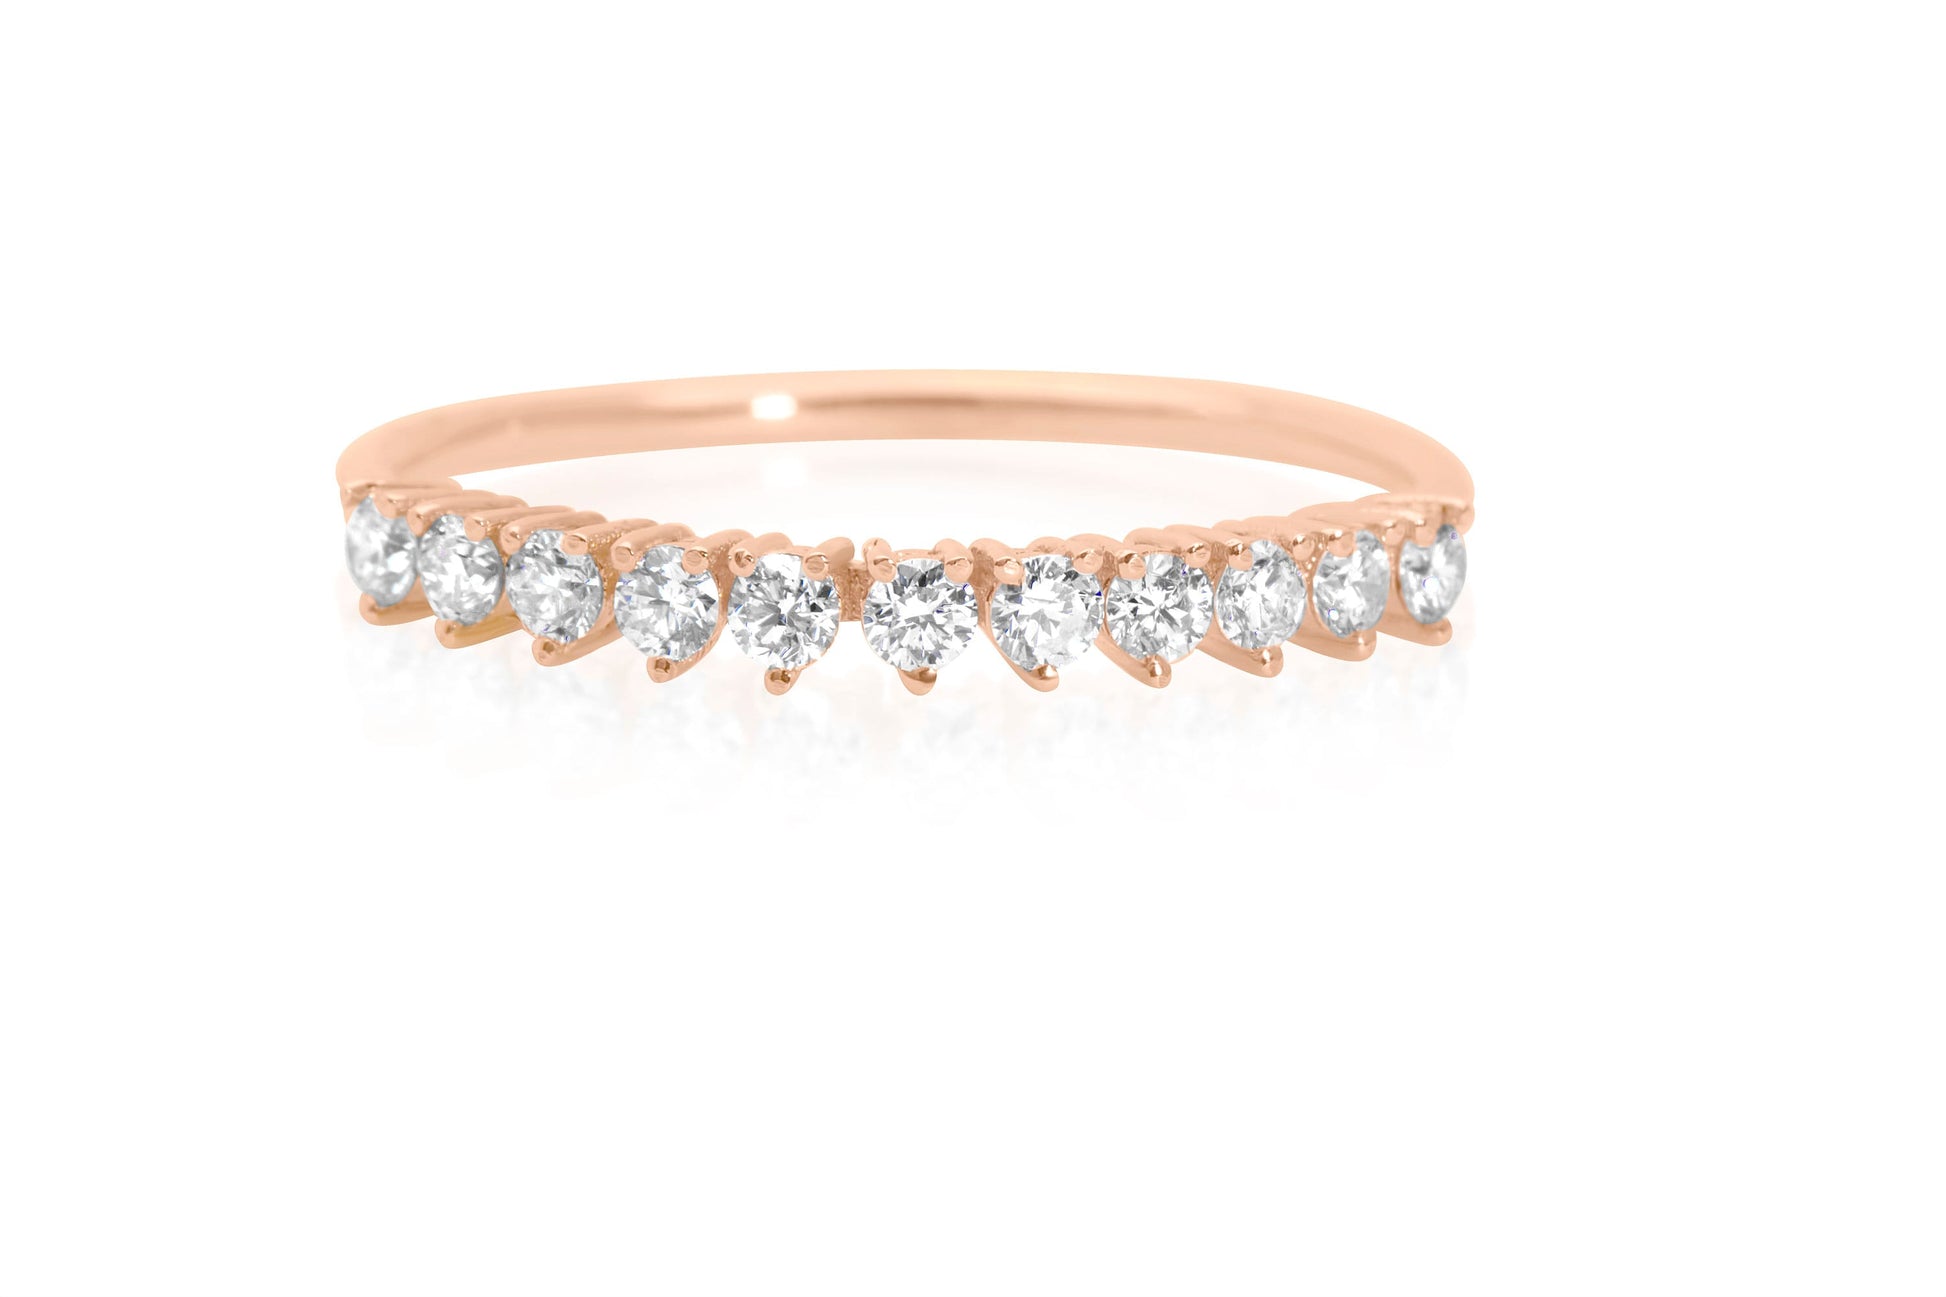 14k Gold Petite Diamond Wedding Ring